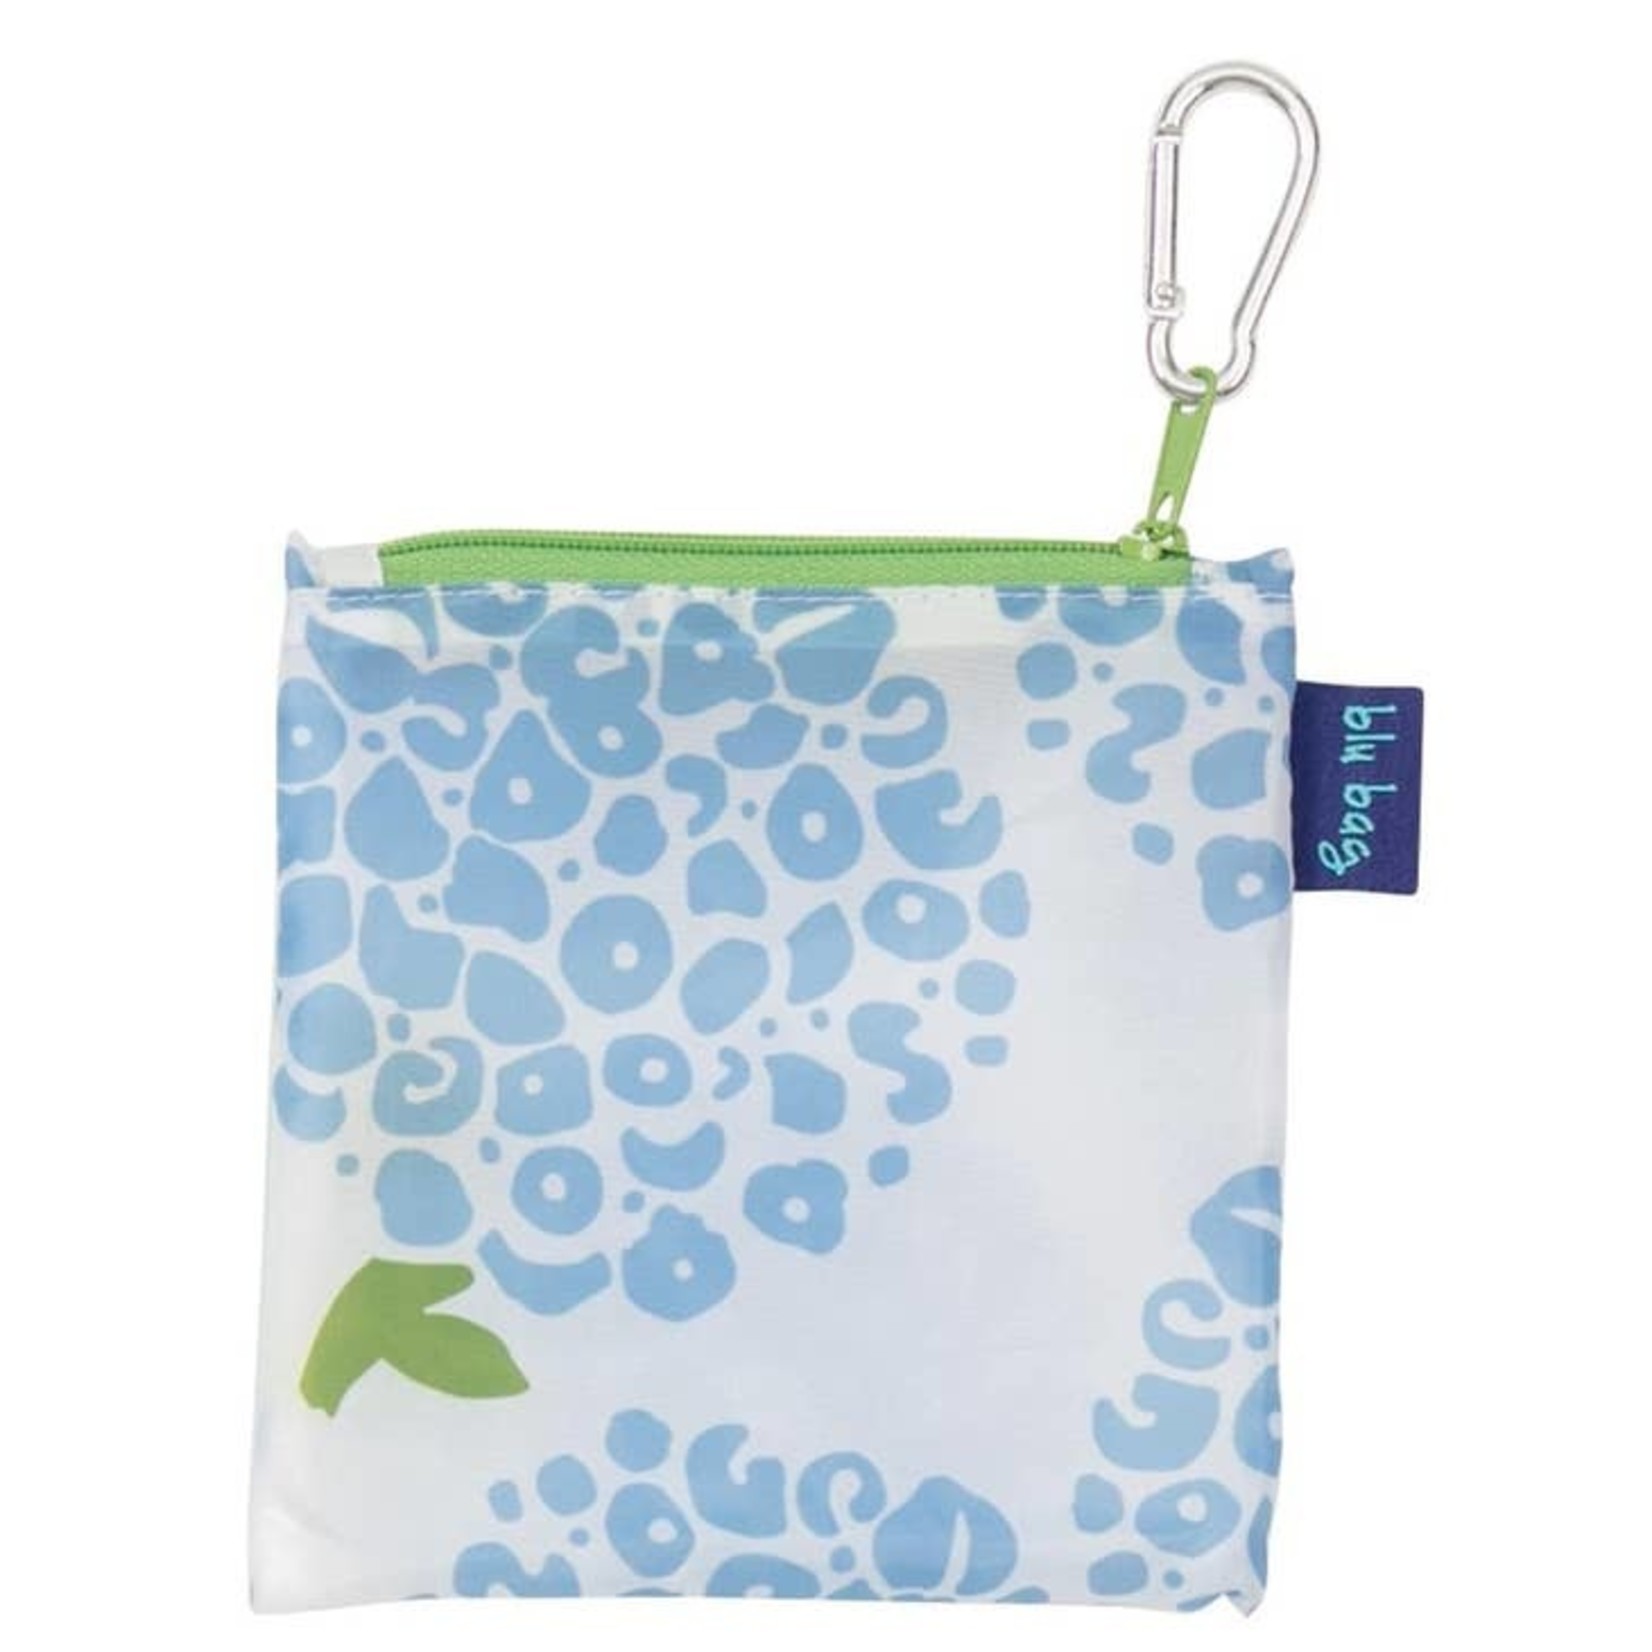 Blu Bag in Hydrangea Blue